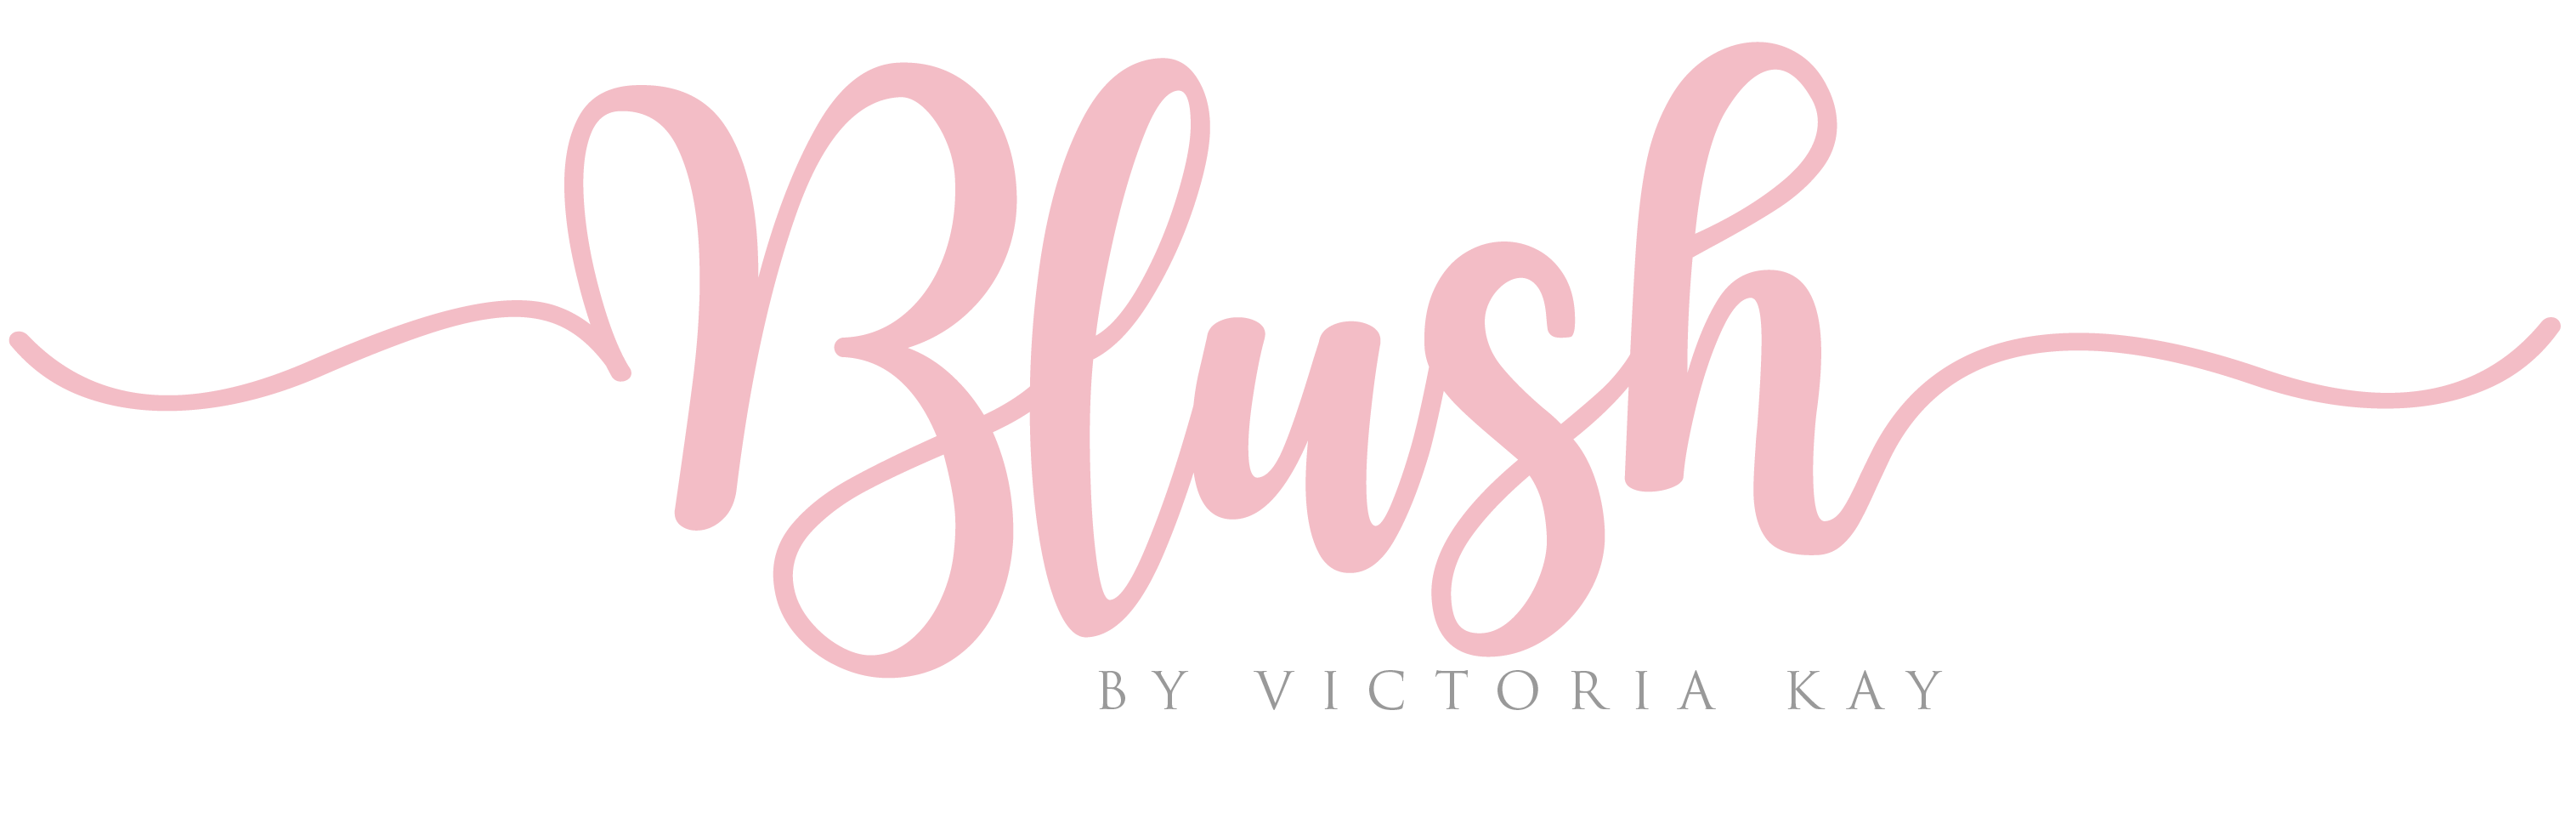 Blush by Victoria Kay